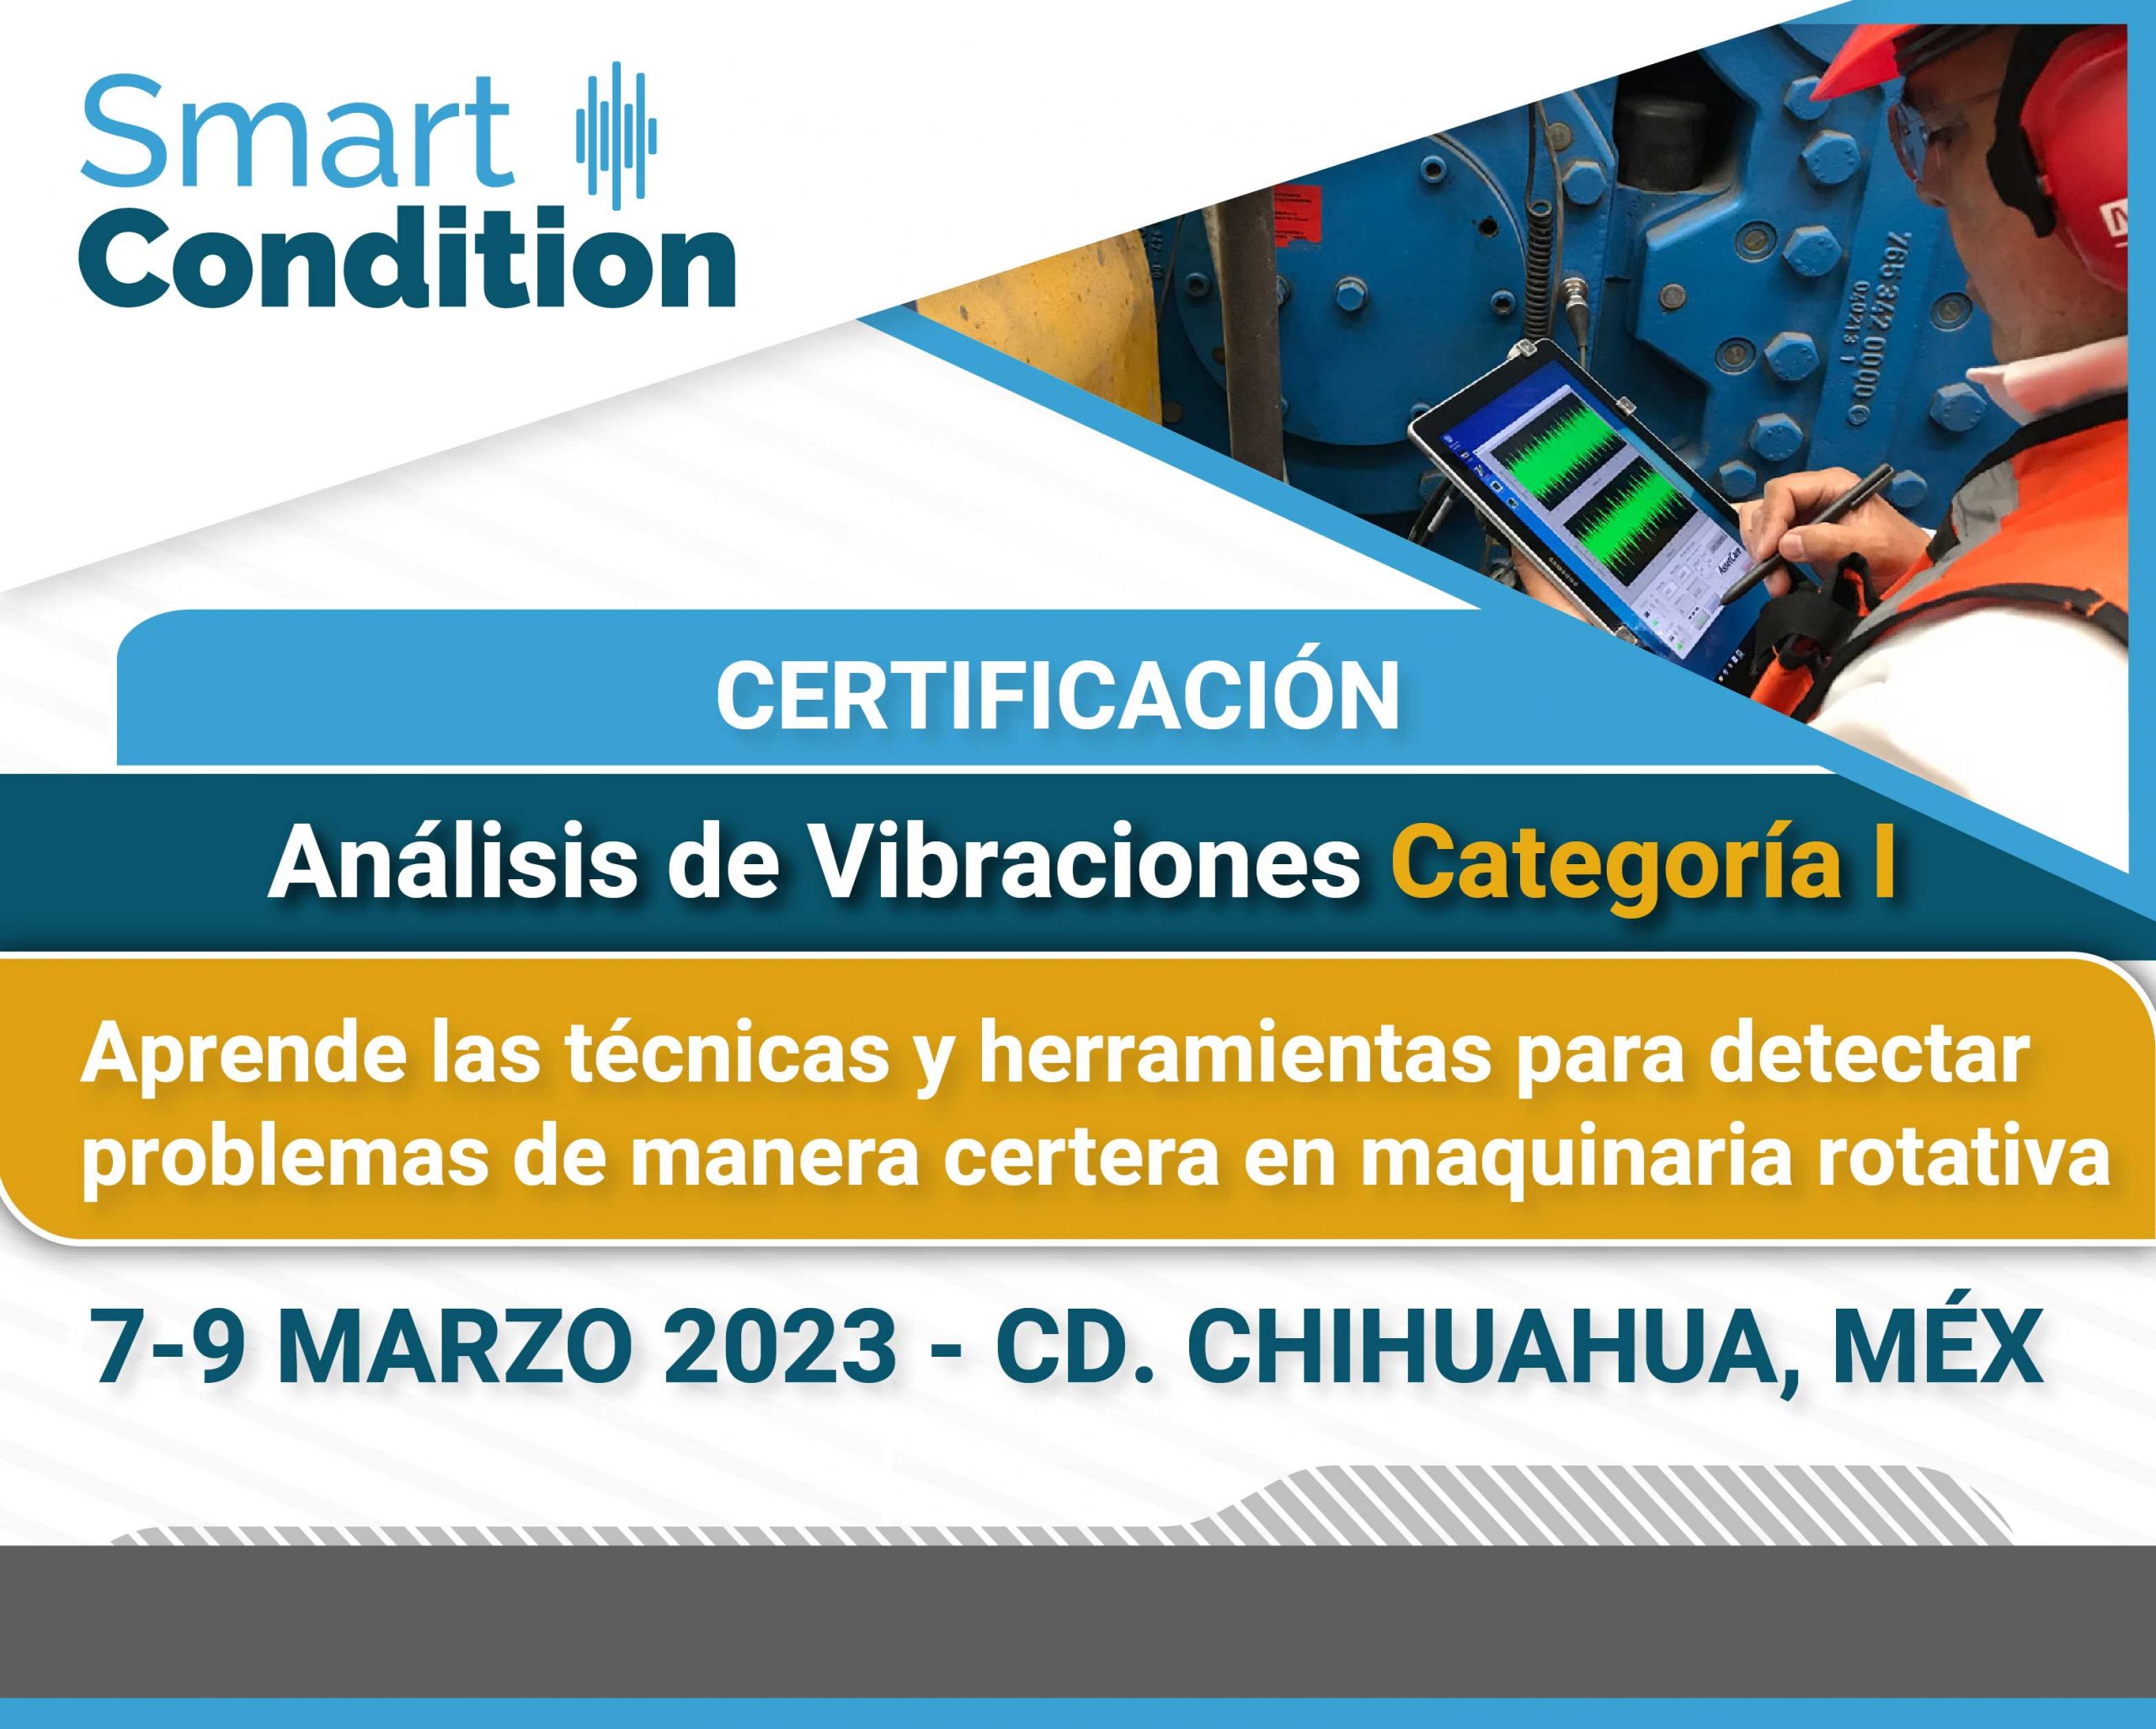 Certificacion Analisis de vibraciones Categoria I Chihuahua 7-9 Marzo 2023